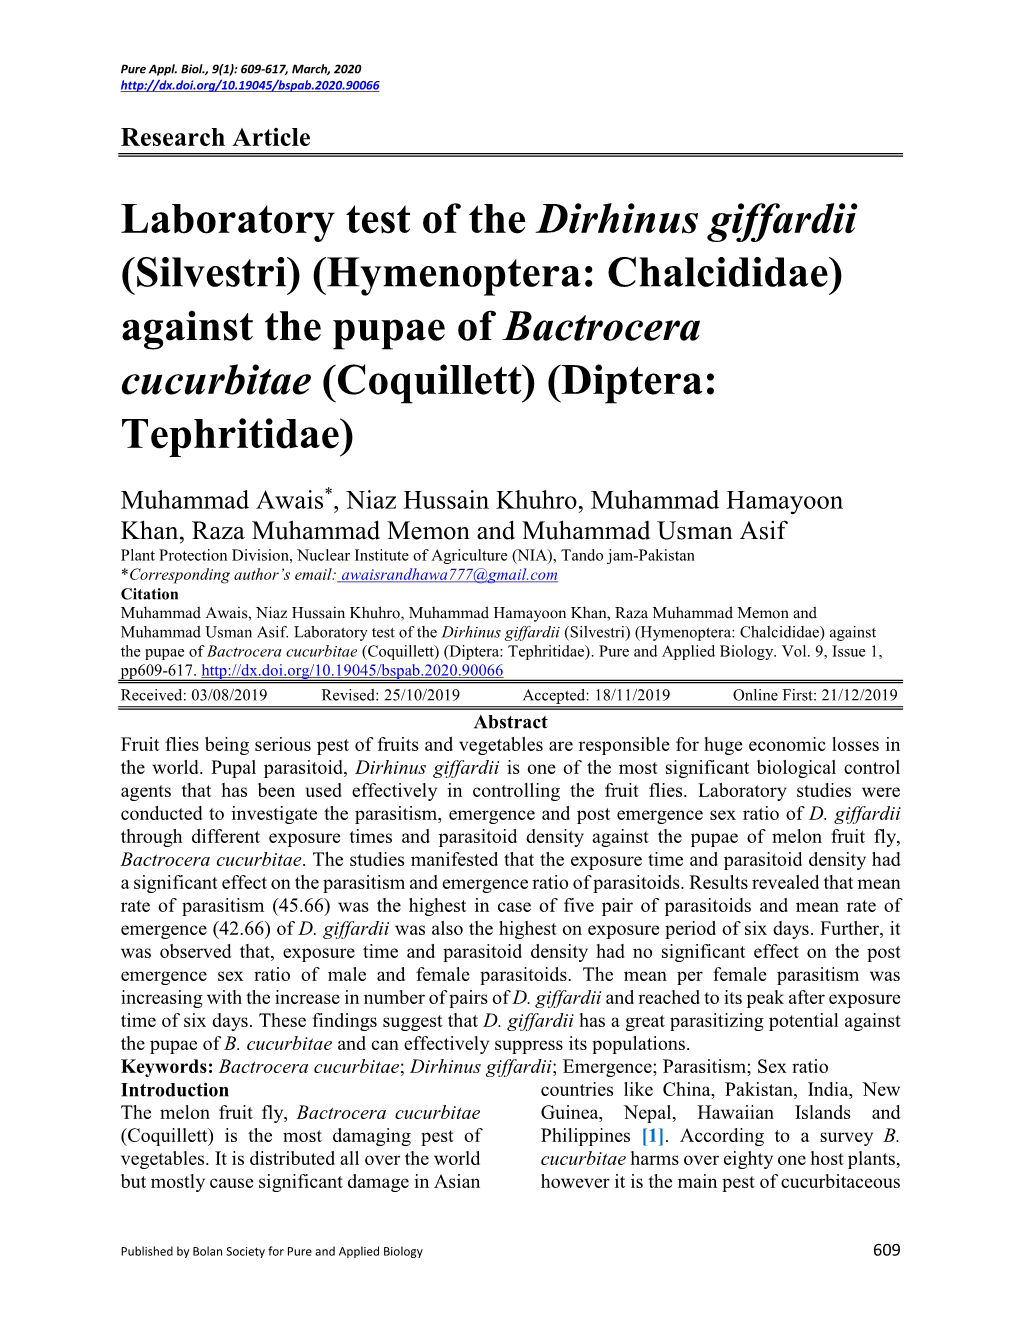 Laboratory Test of the Dirhinus Giffardii (Silvestri) (Hymenoptera: Chalcididae) Against the Pupae of Bactrocera Cucurbitae (Coquillett) (Diptera: Tephritidae)